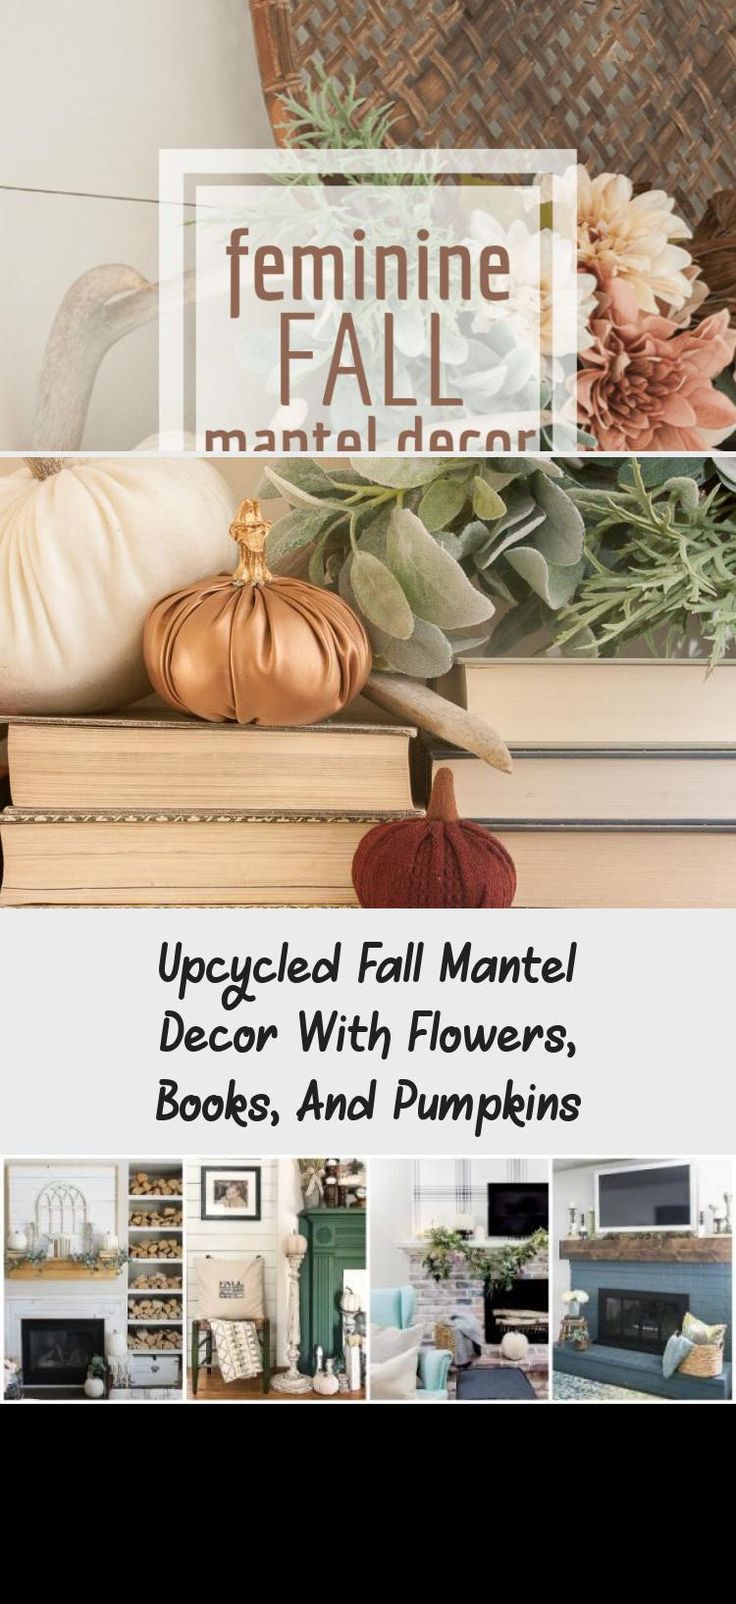 Upcycling Gartendeko Inspirierend Fall Mantel Decor with Flowers Pumpkins and Books